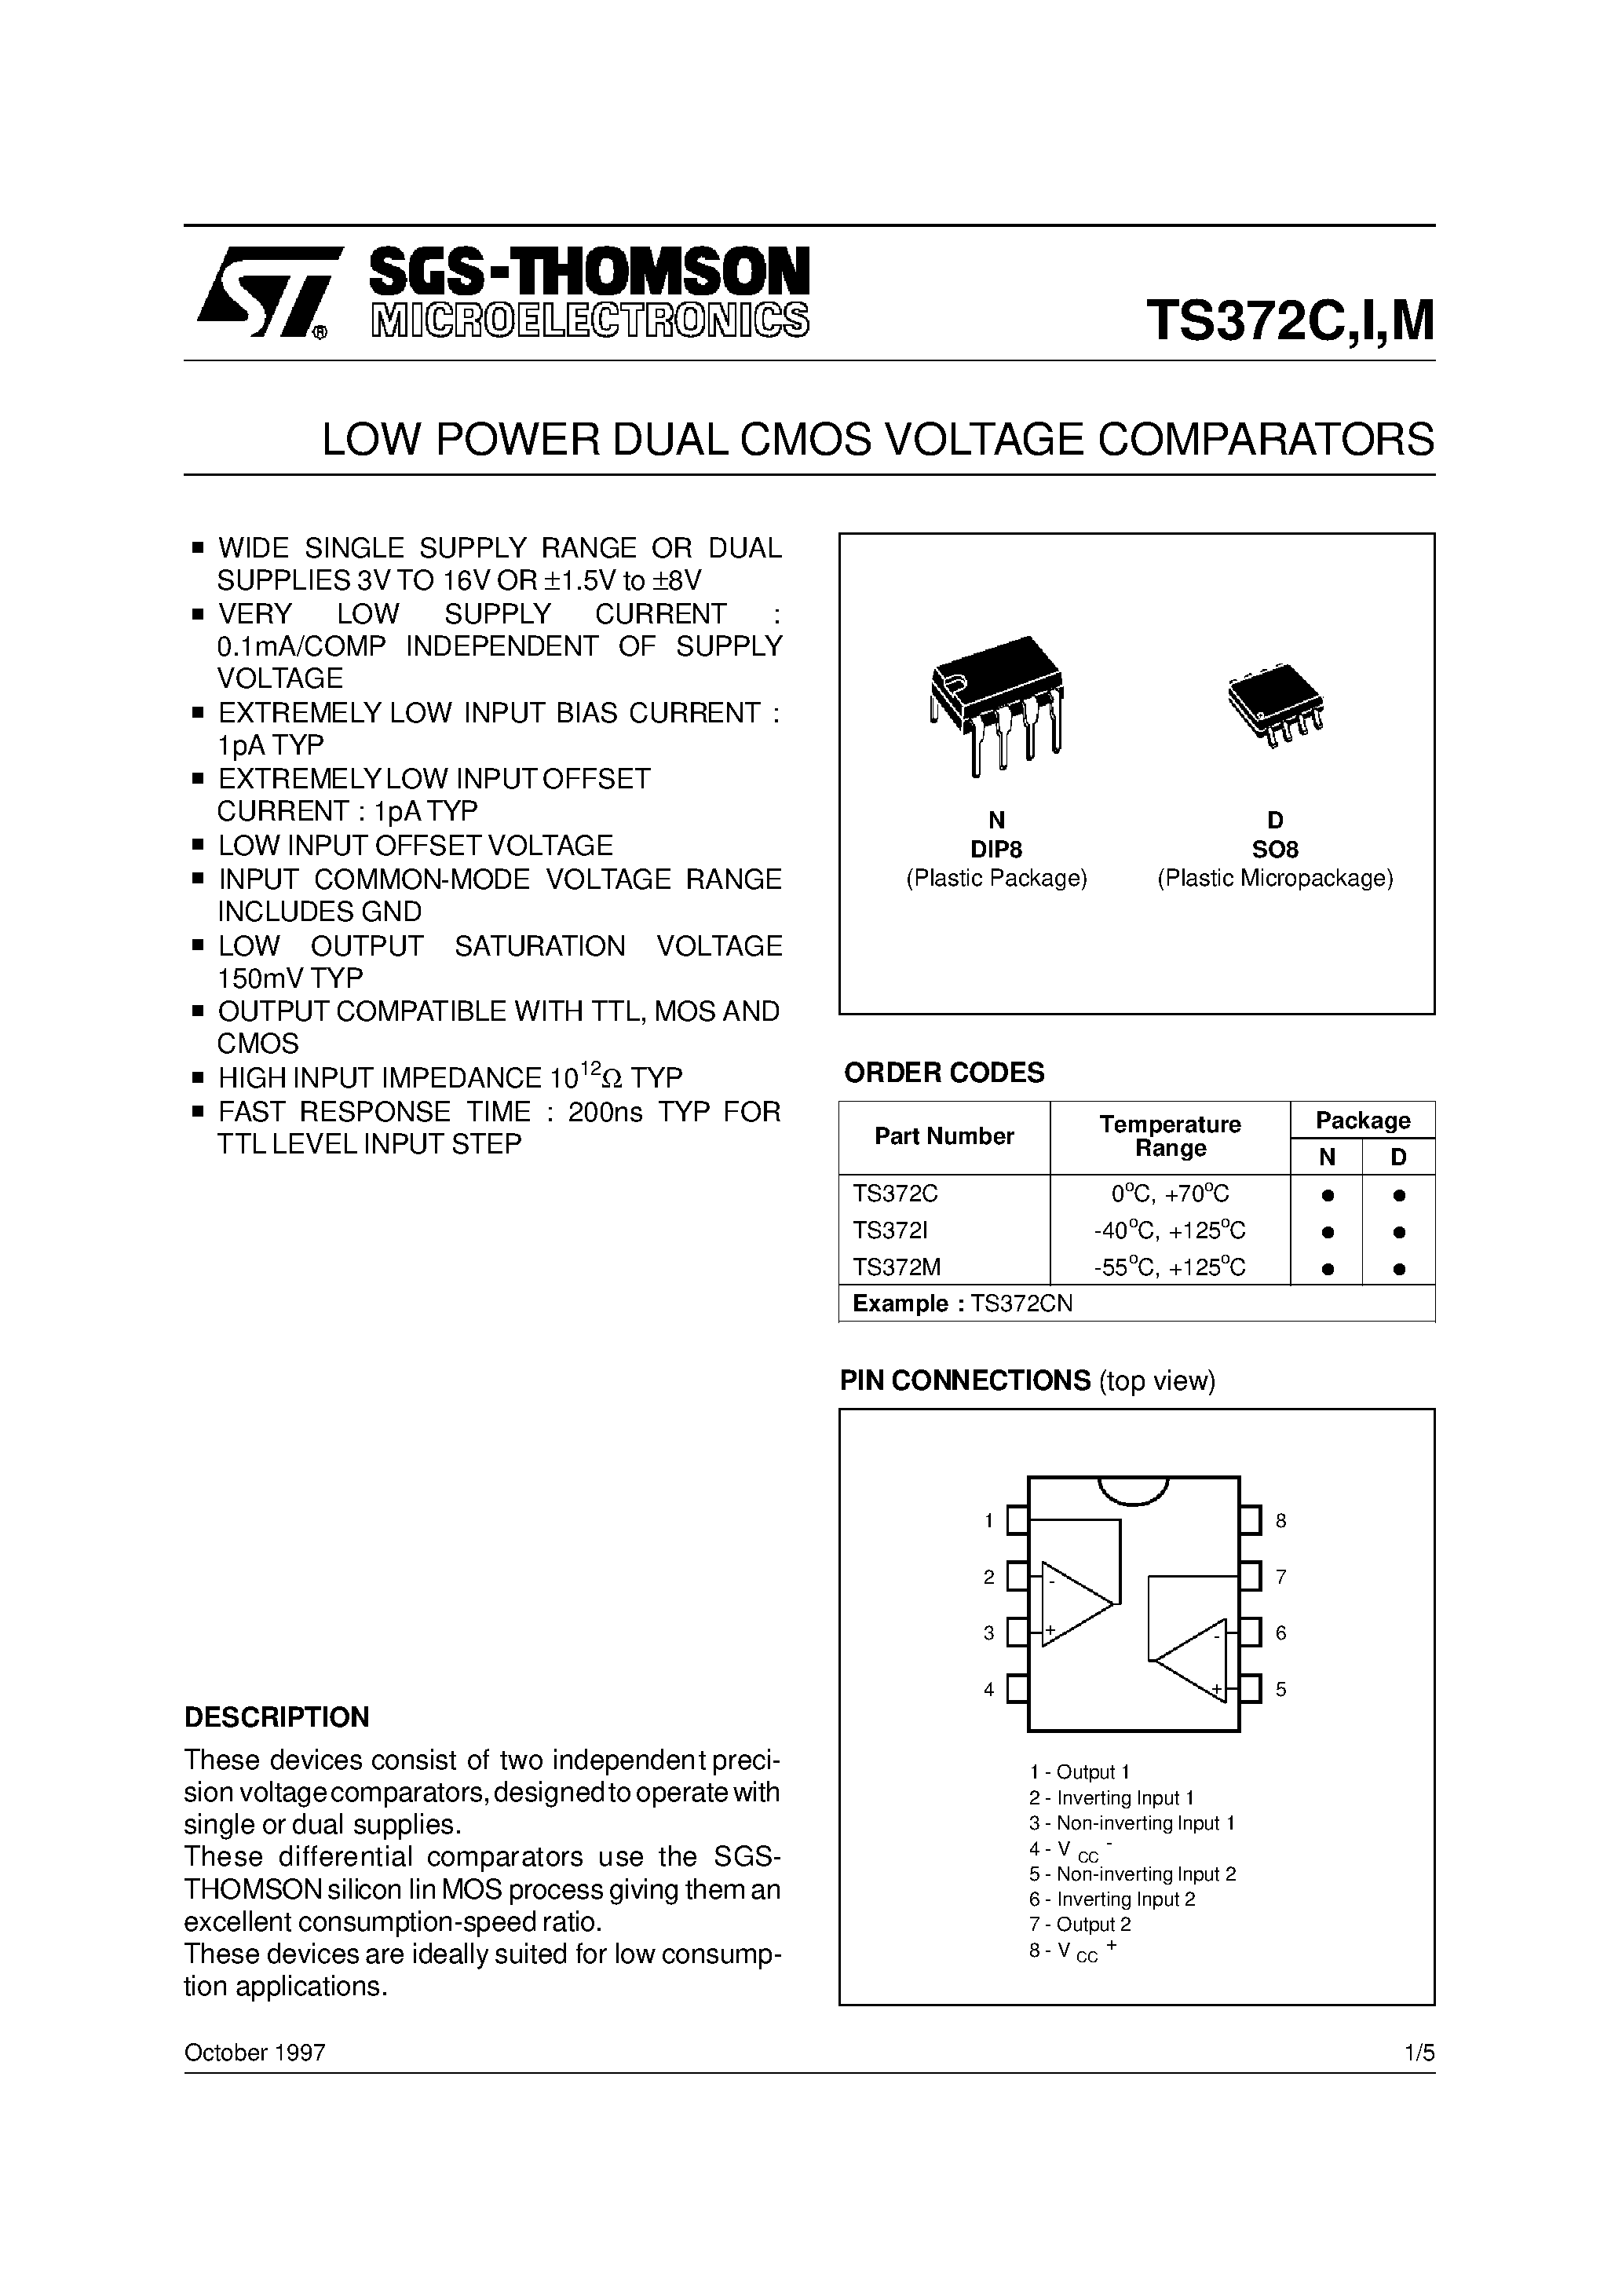 Datasheet TS372M - LOW POWER DUAL CMOS VOLTAGE COMPARATORS page 1